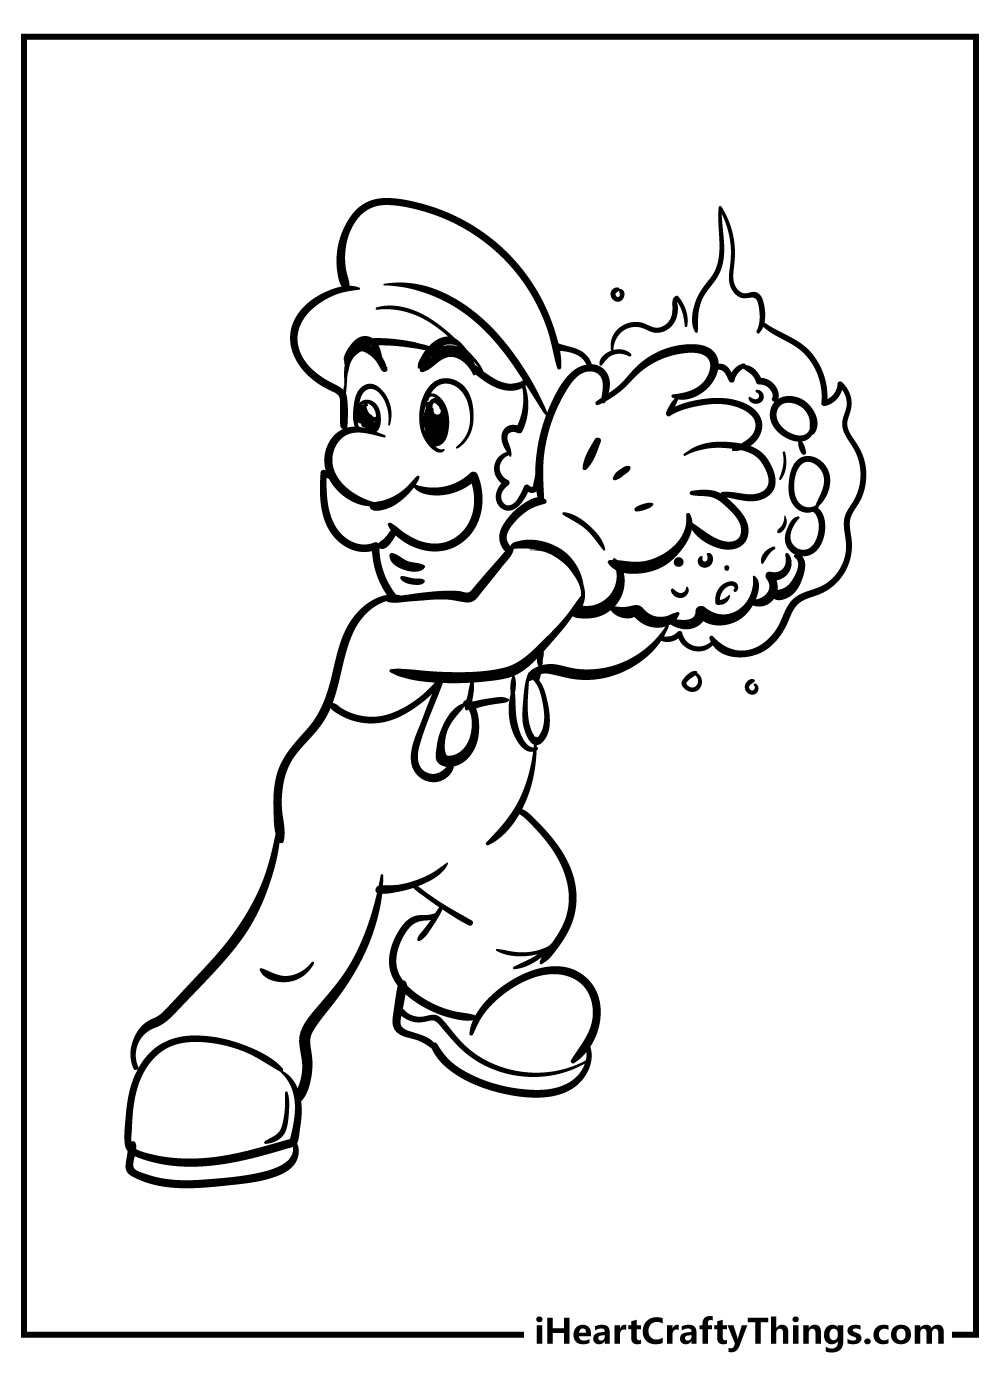 Super Mario Bros coloring pages free printable